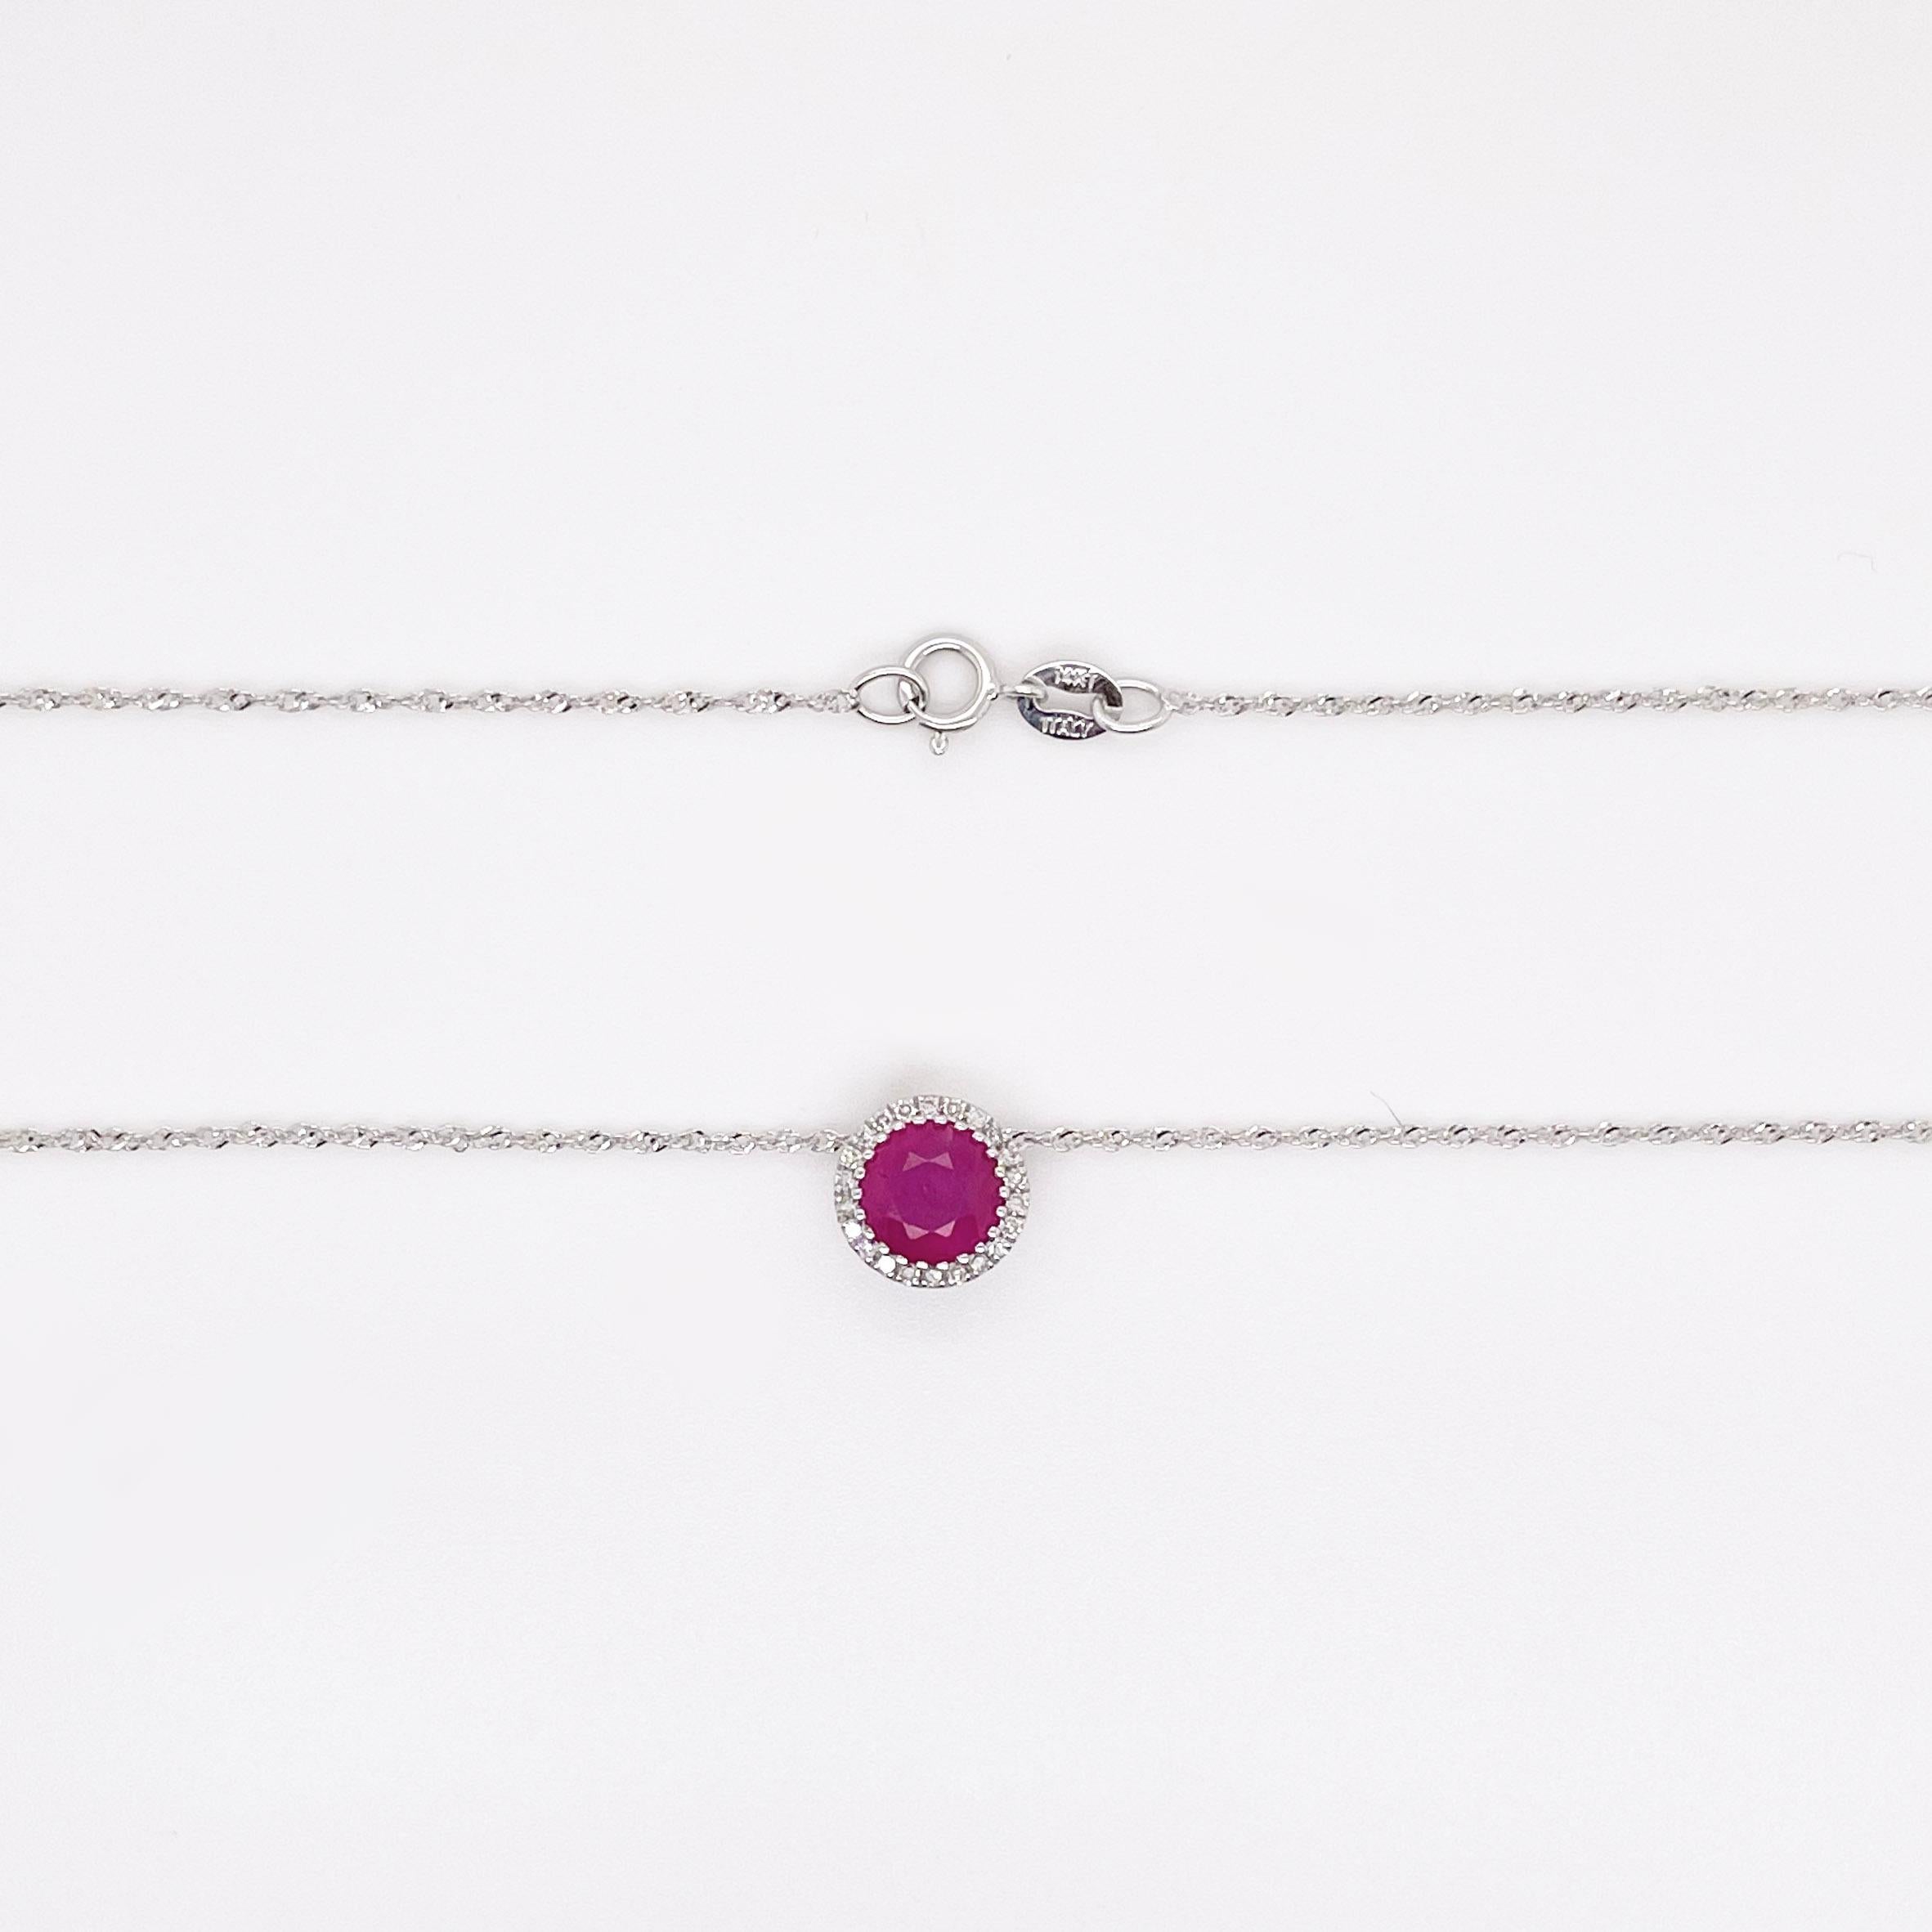 Contemporary Diamond Ruby Pendant Necklace, White Gold, Round Ruby and Diamond Halo